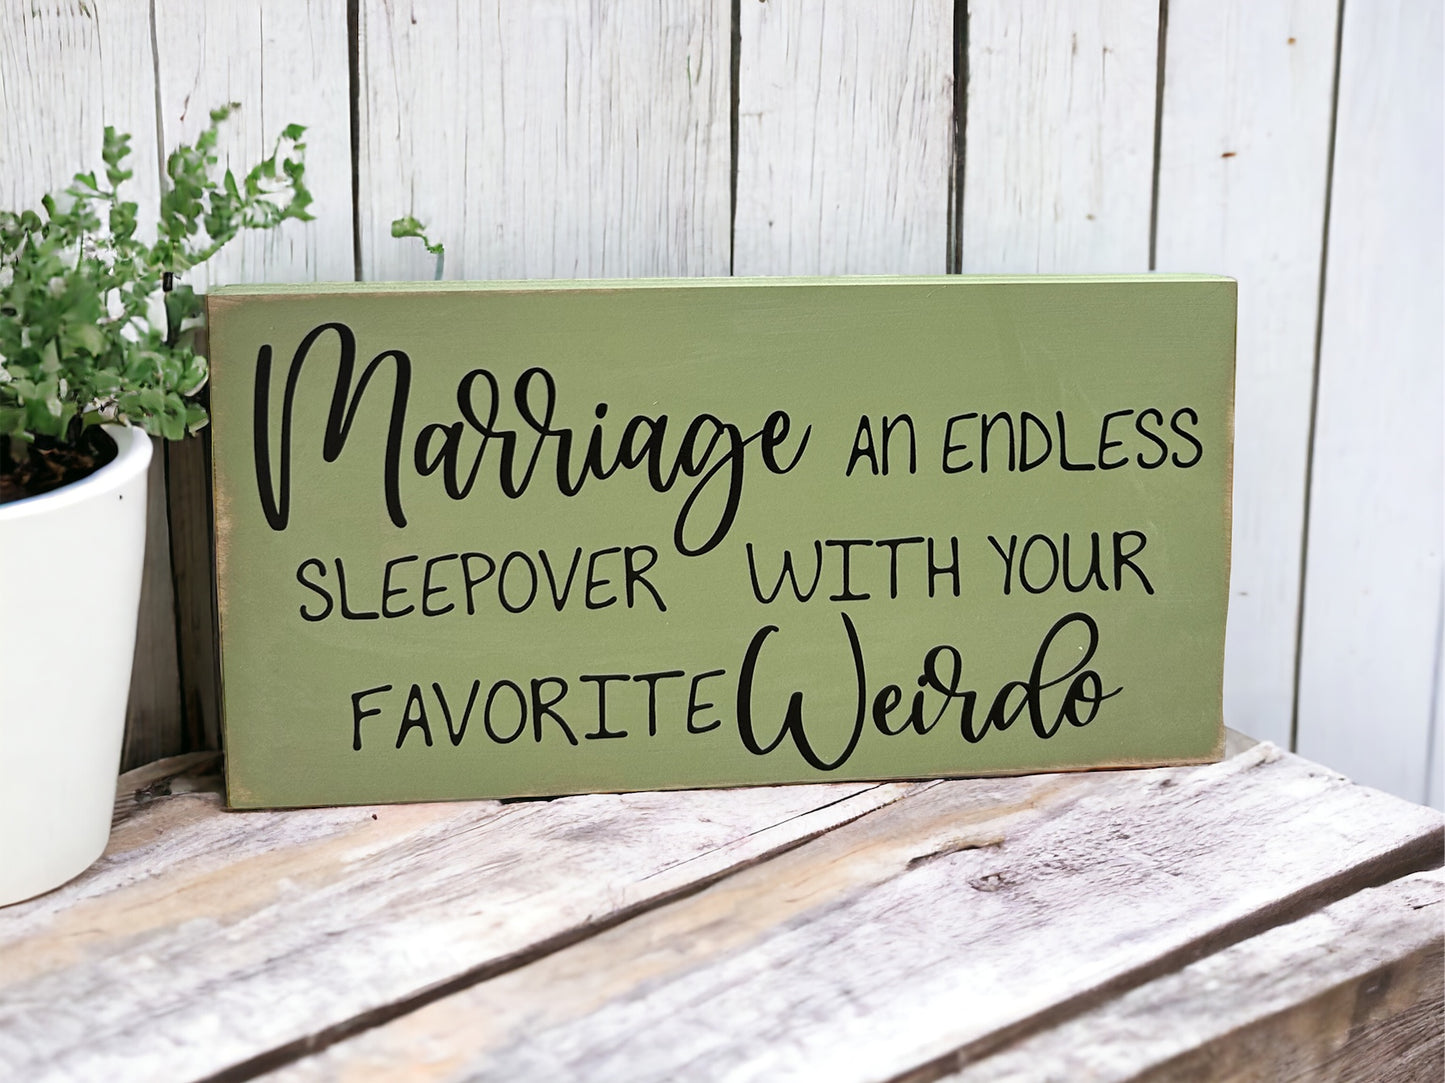 Marriage Sleepover - Funny Rustic Wood Shelf Sitter